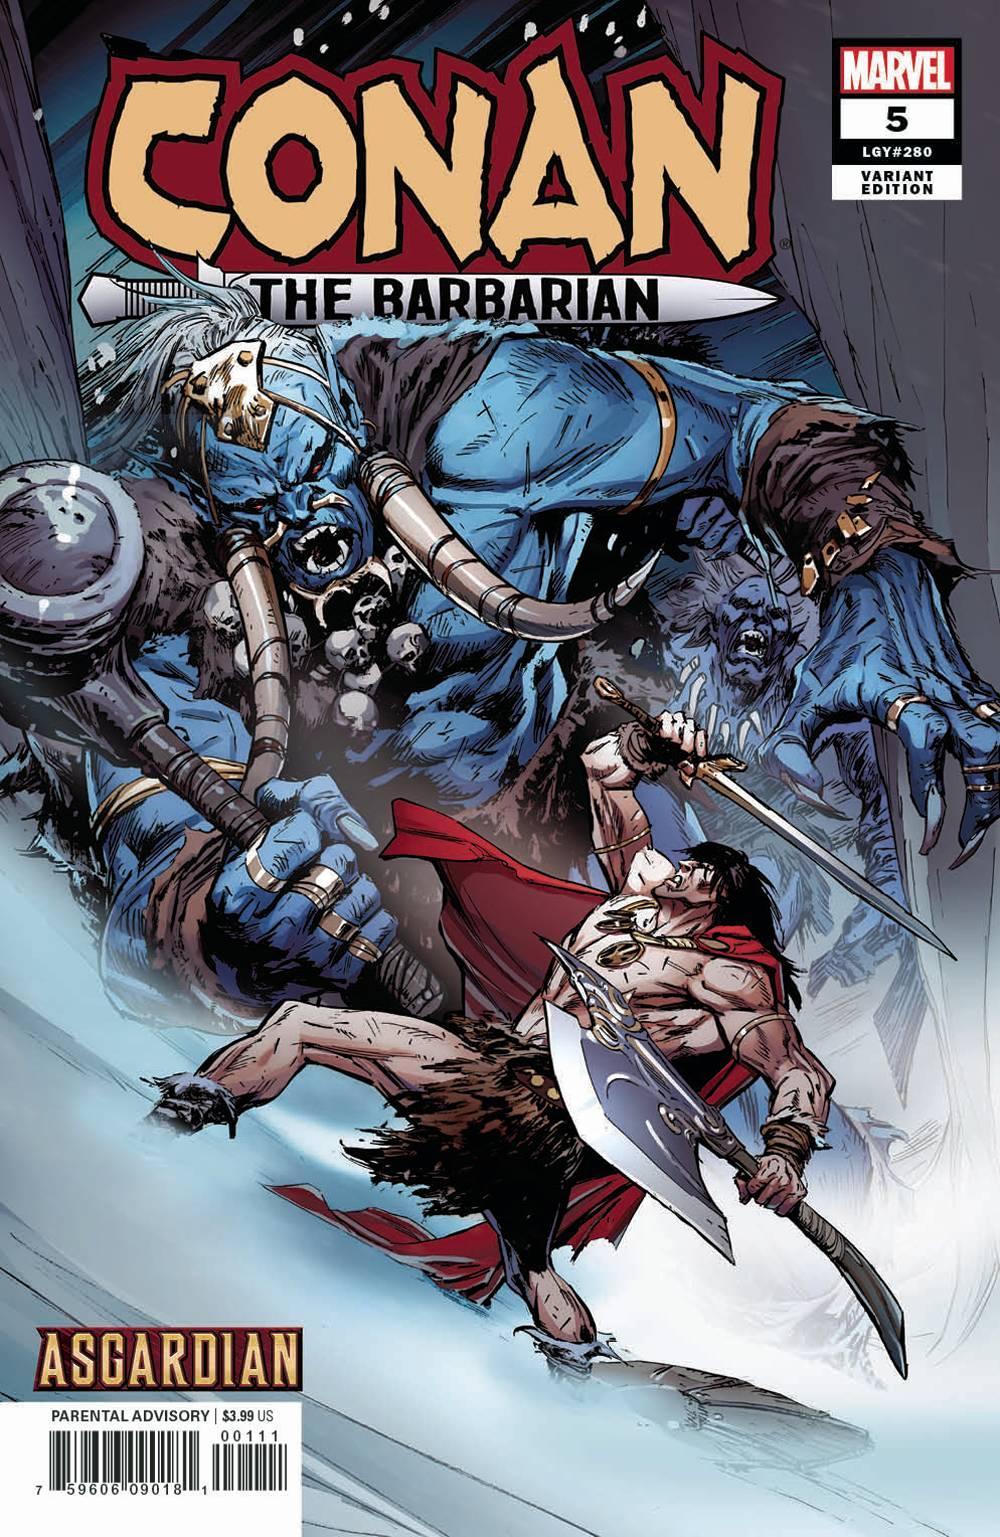 CONAN THE BARBARIAN VOL 4 #5 ARTIST ASGARDIAN VAR - Kings Comics